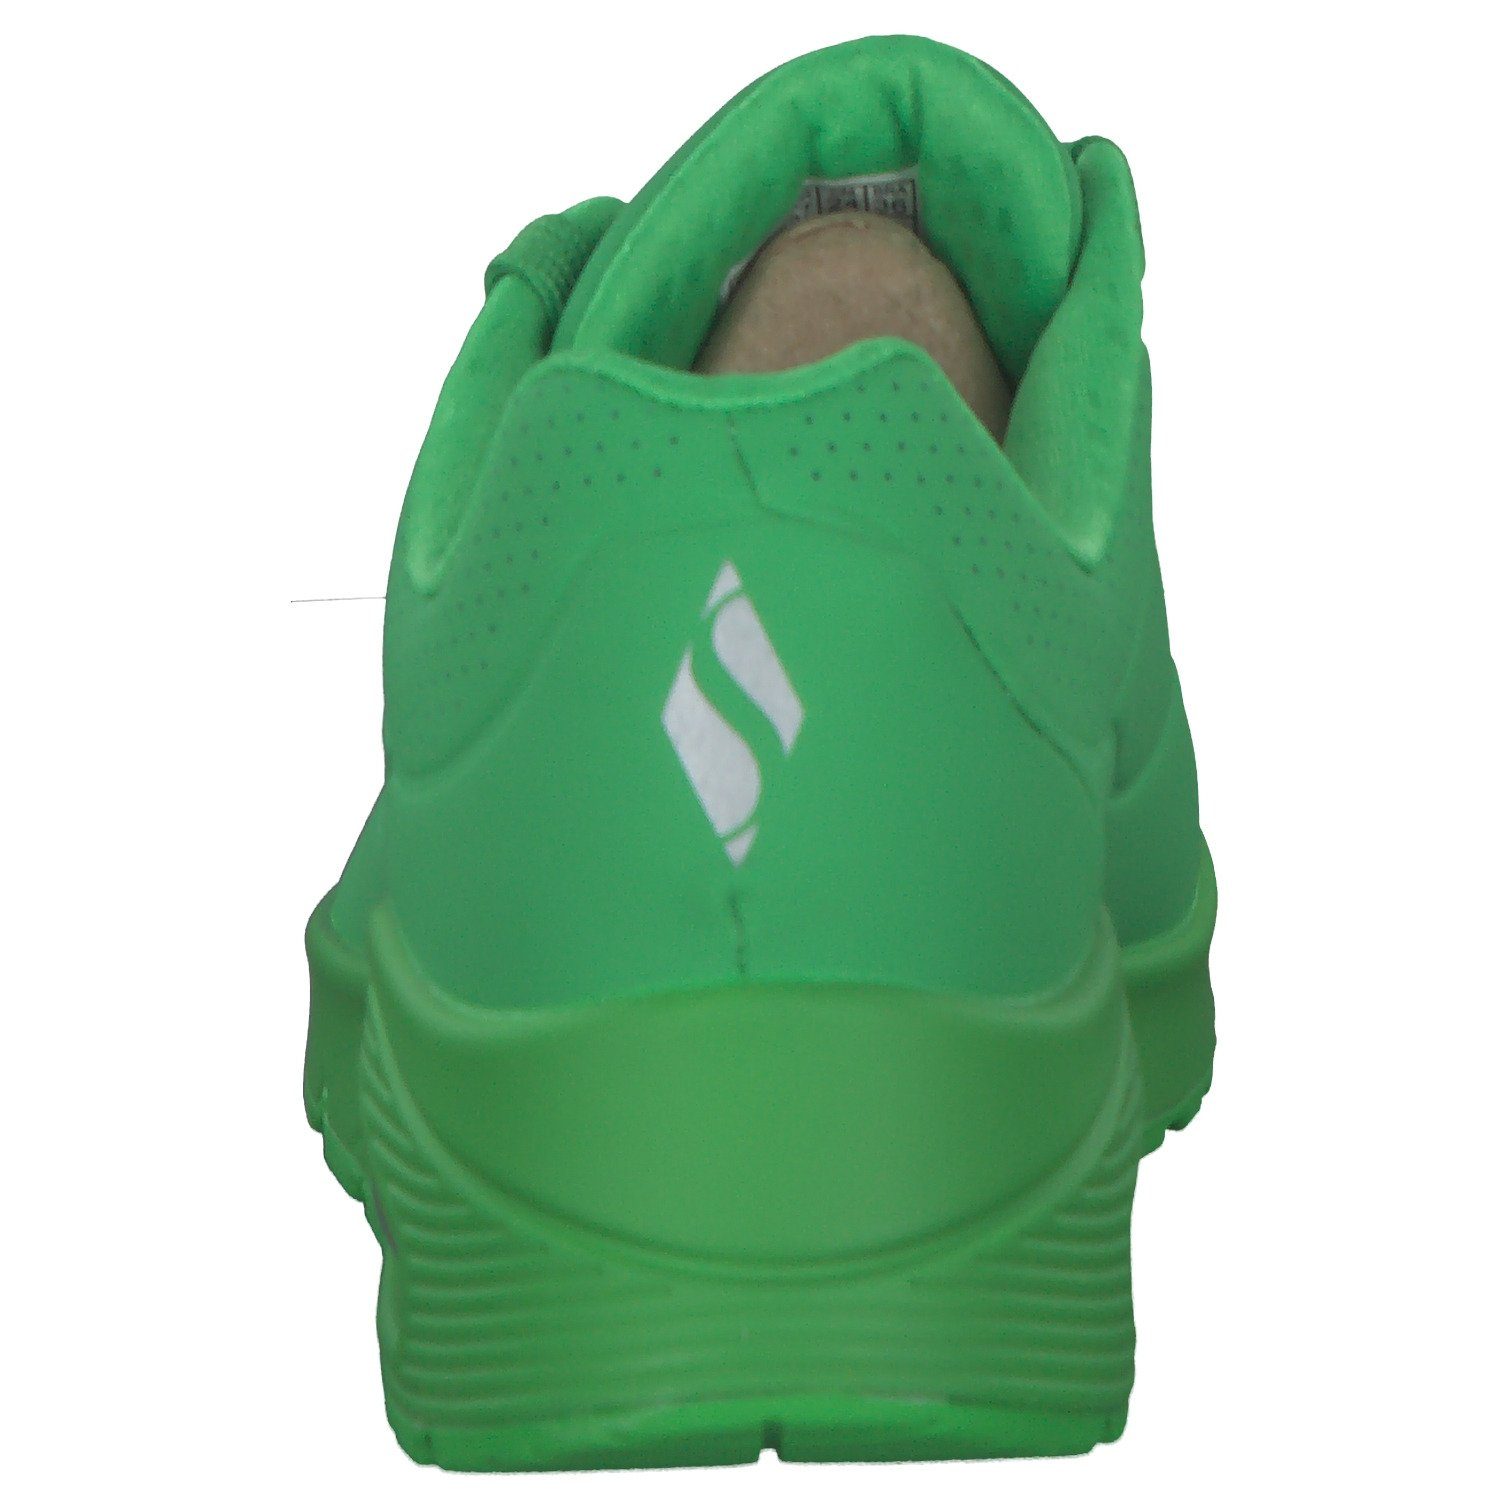 Uno Sneaker On 73690 Air Green Skechers (20203098) Skechers Stand